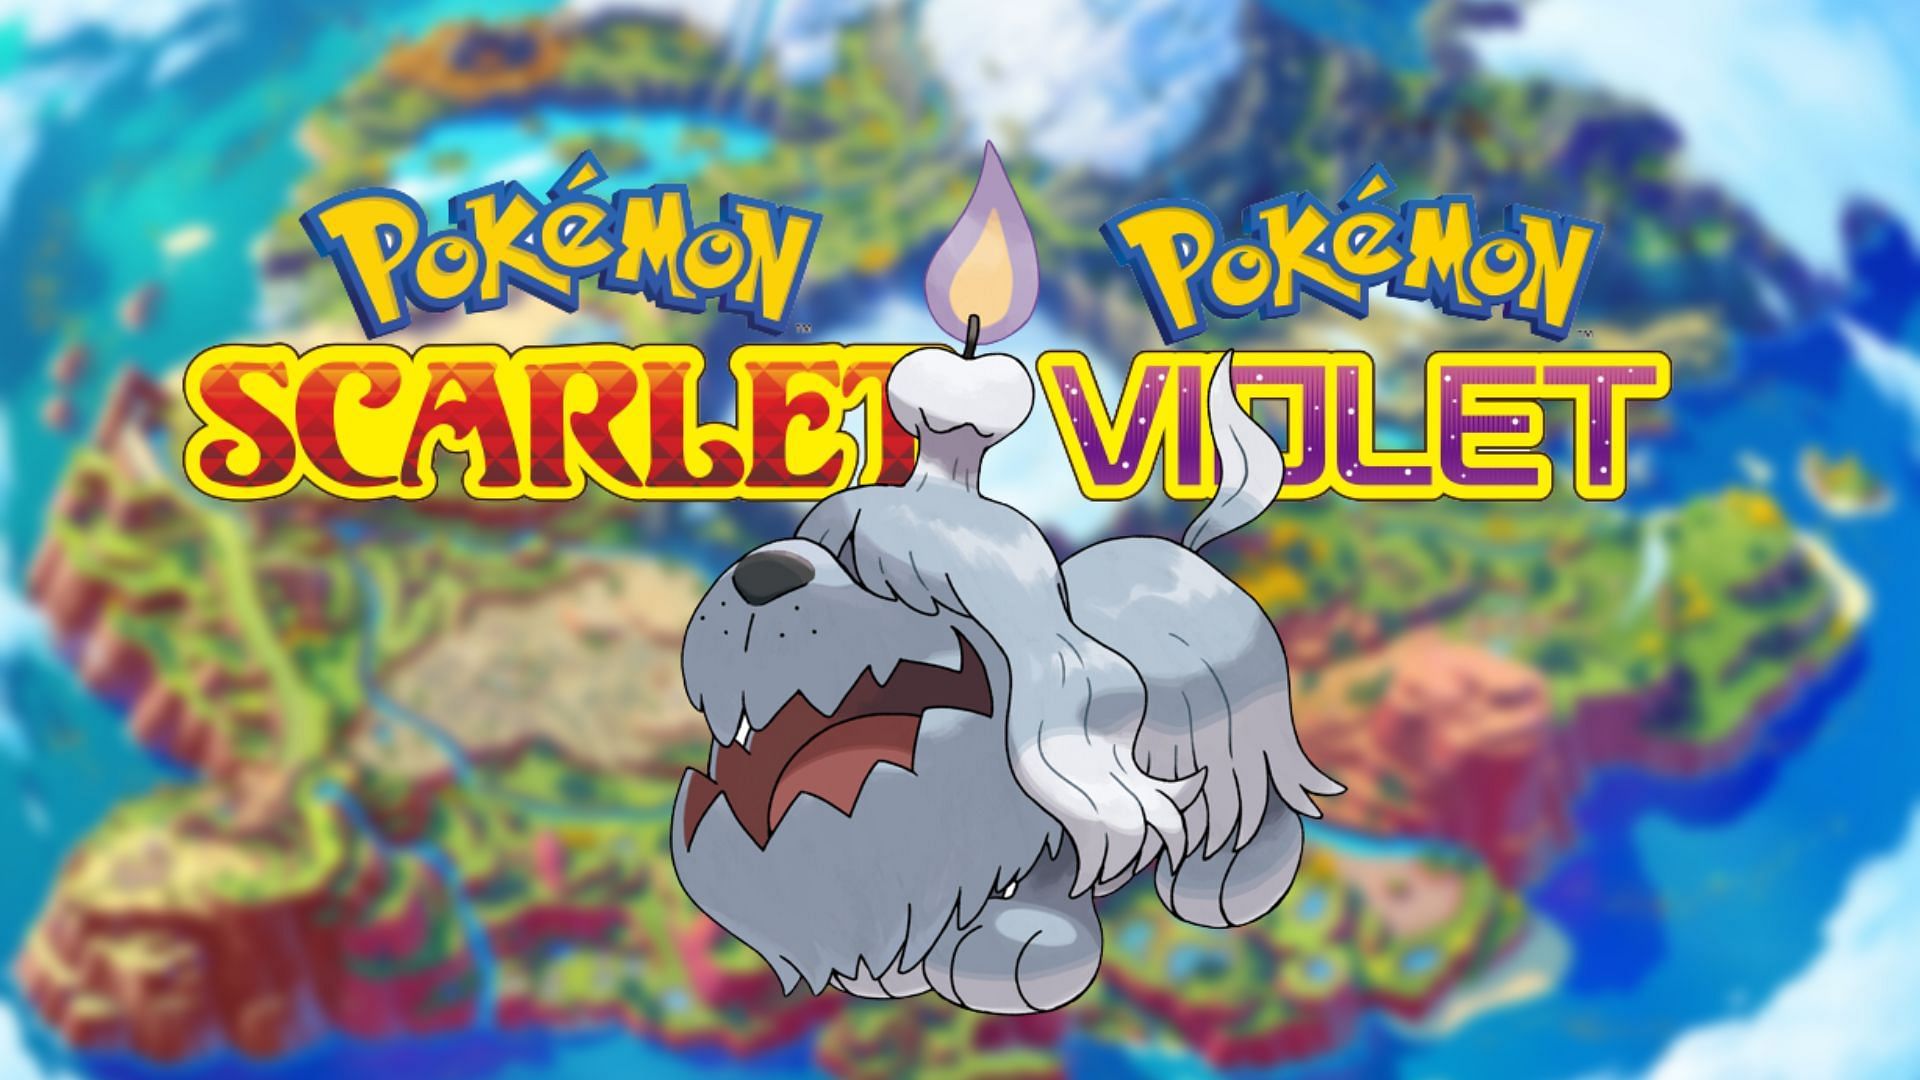 Novo Pokémon Greavard estará em Pokémon Scarlet e Violet